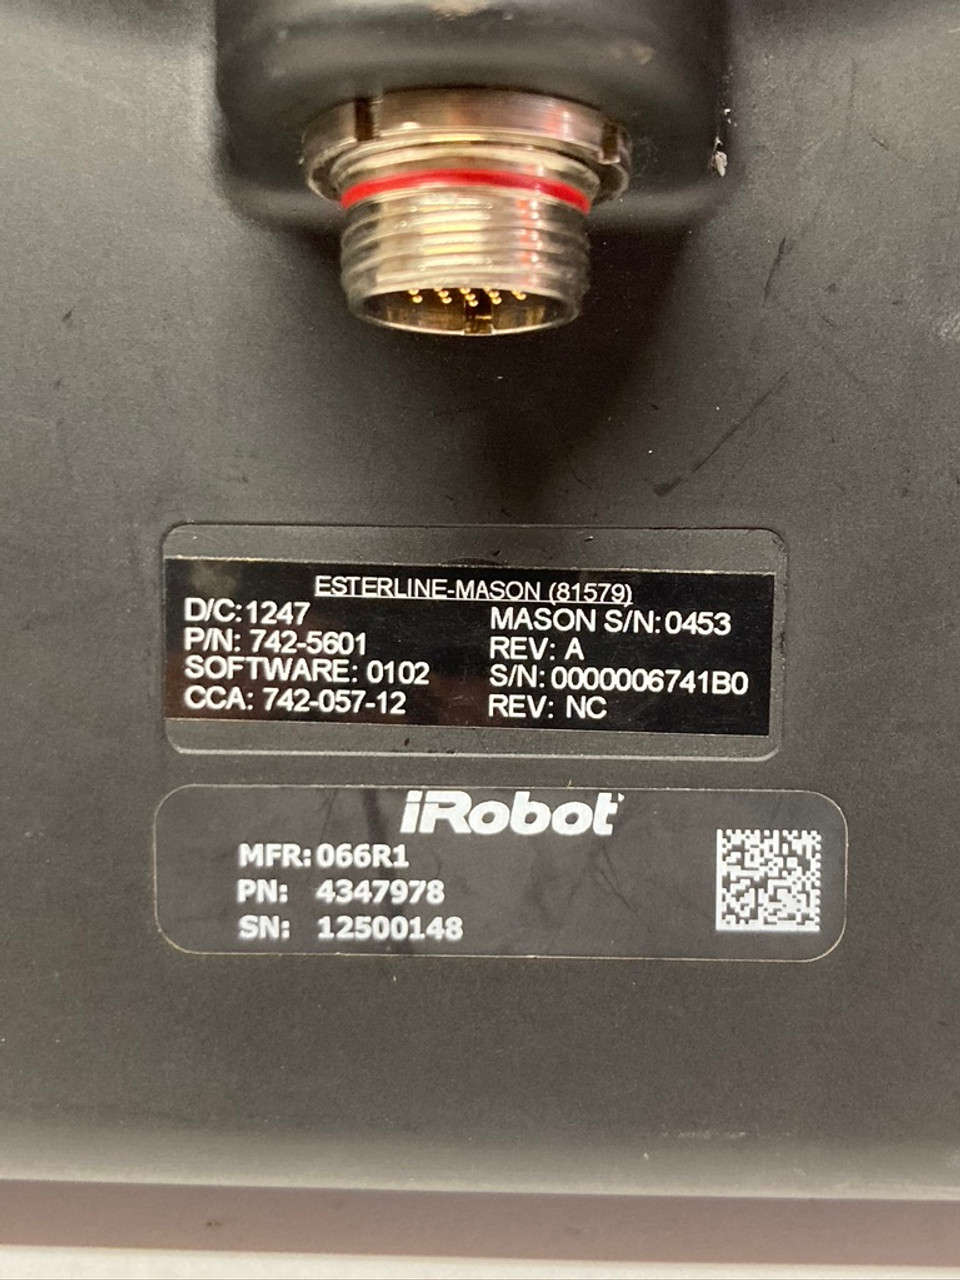 iRobot Pacbot SUGV HaWc Controller System 742-5601 iRobot/Mason Electric